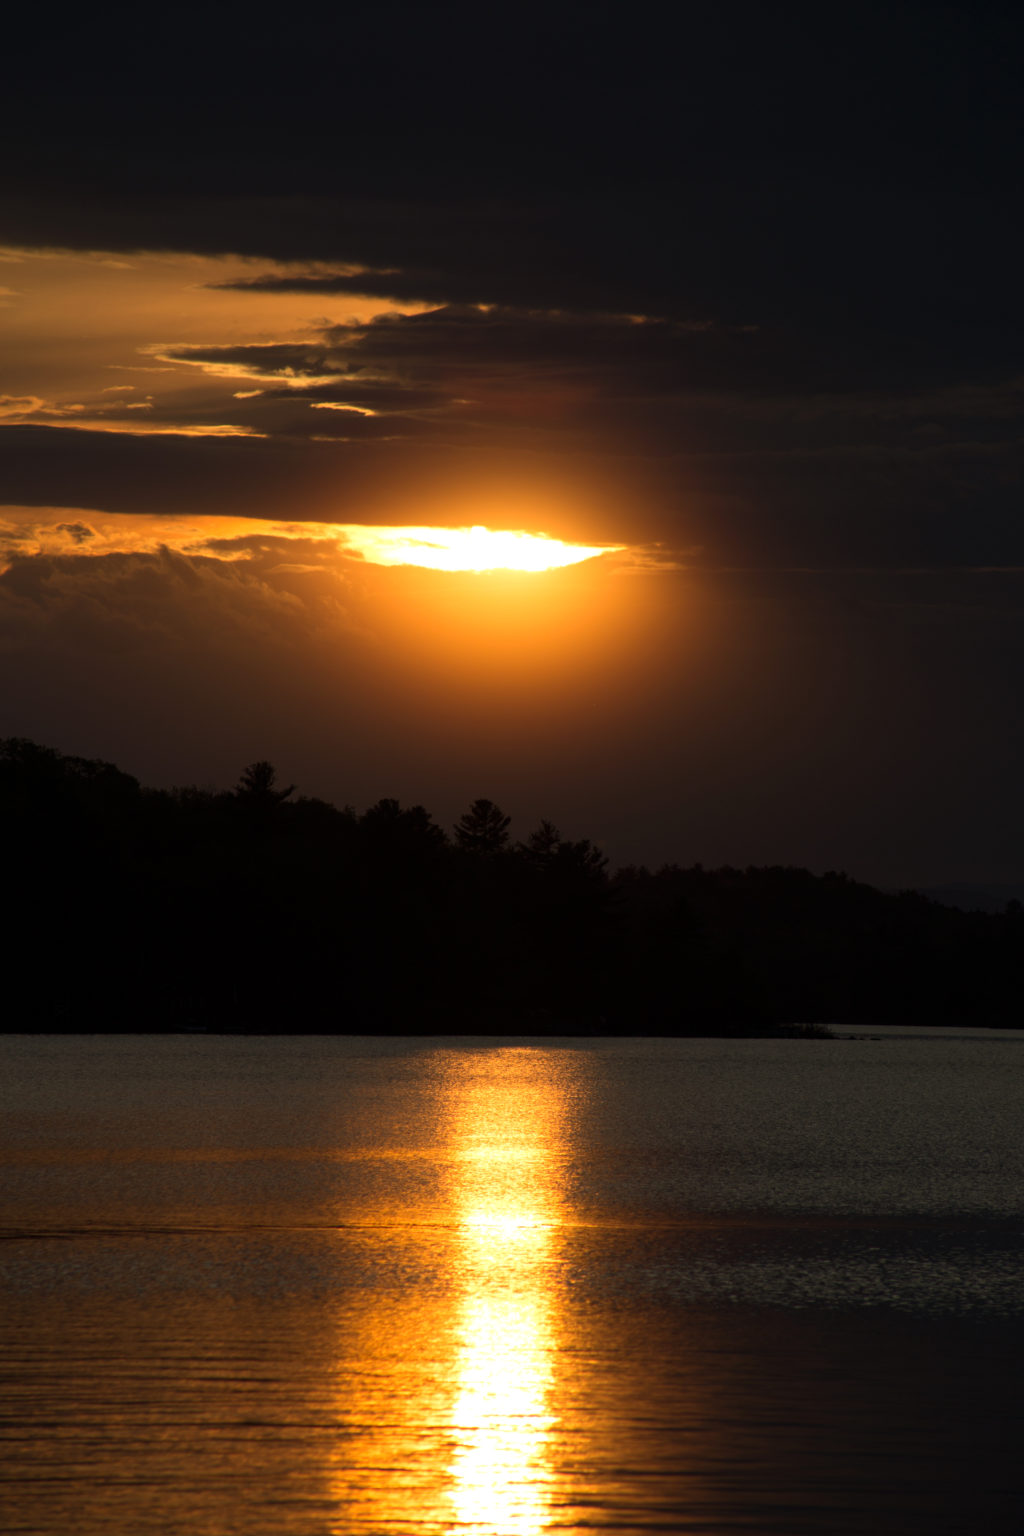 Sunbeam Reflection on the Lake